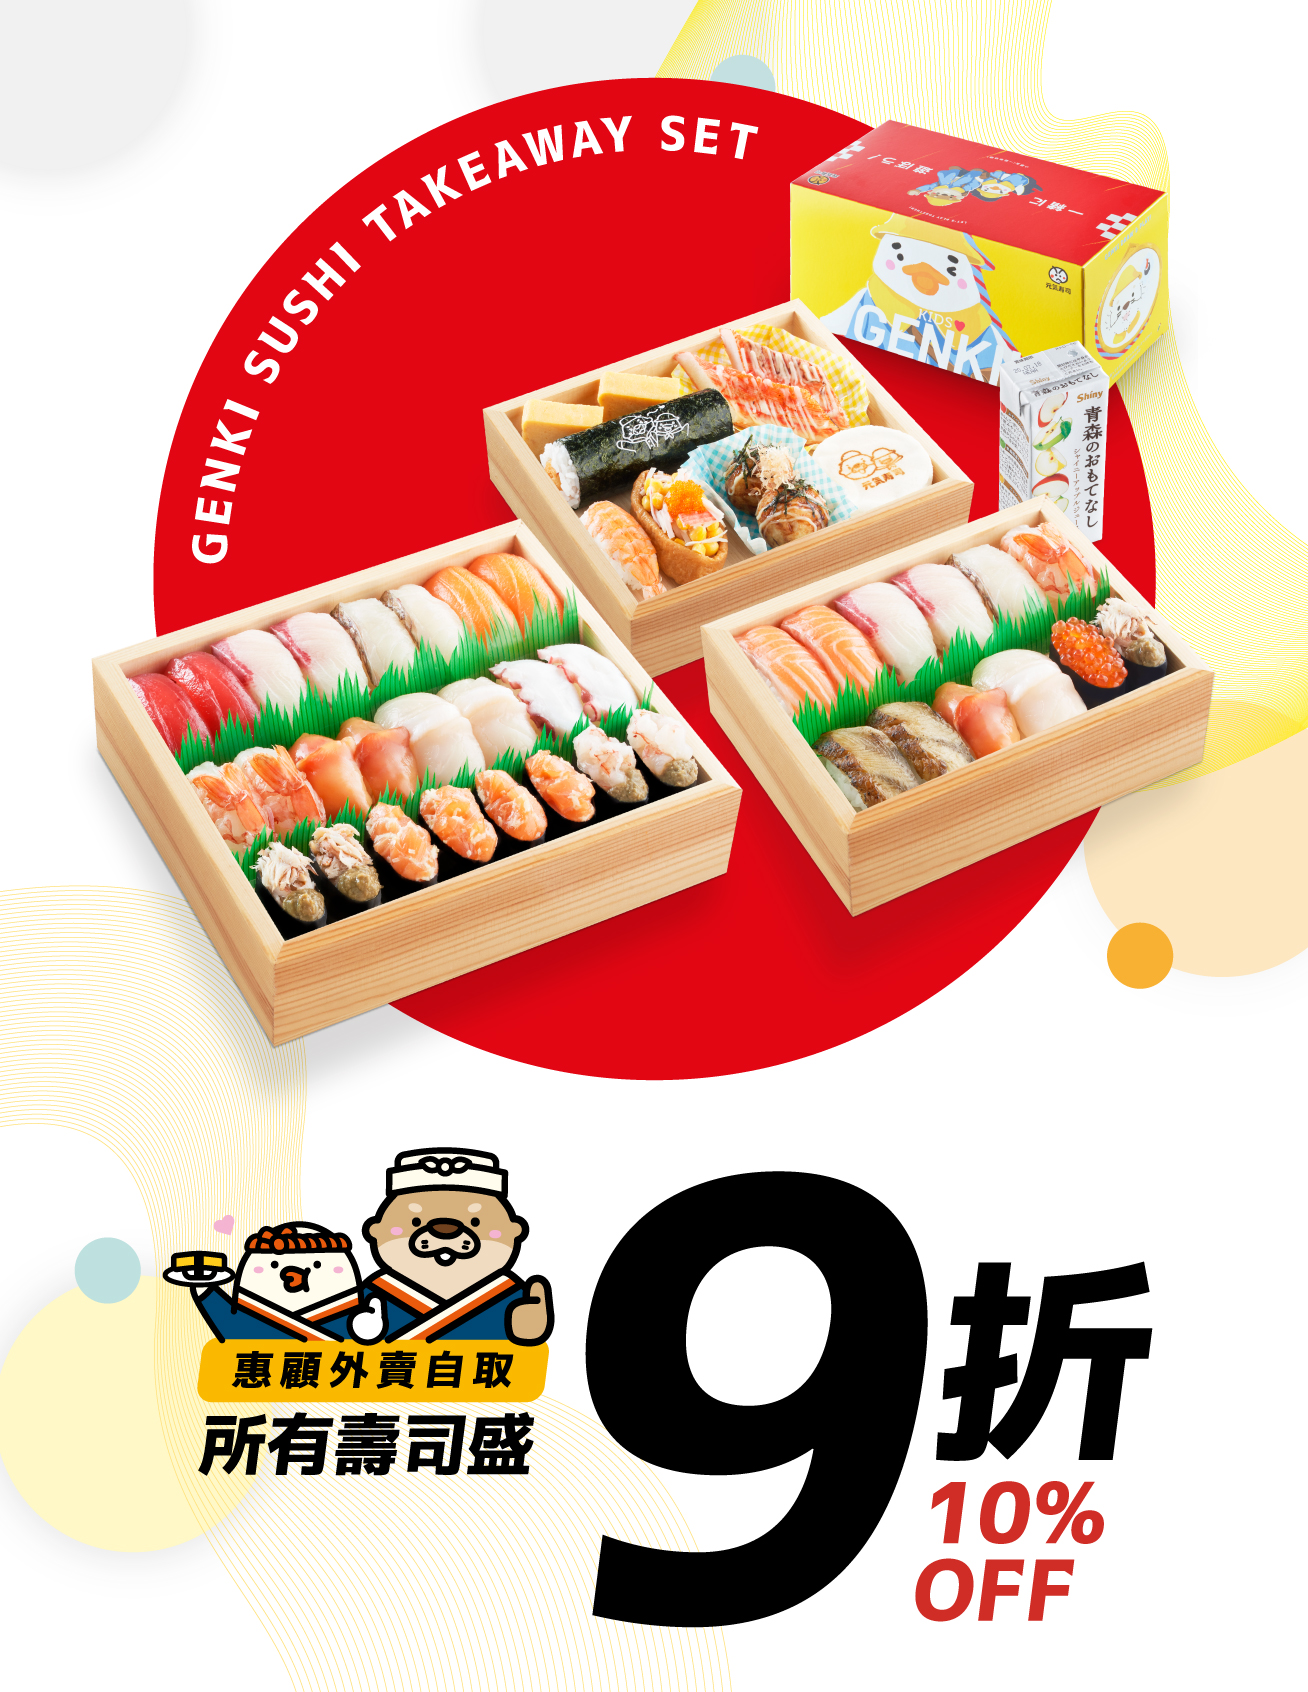 2203_04168_JAP_GEKHD_genki_sushi_set_promotion_digital_v2_orderingsite_newscover.jpg